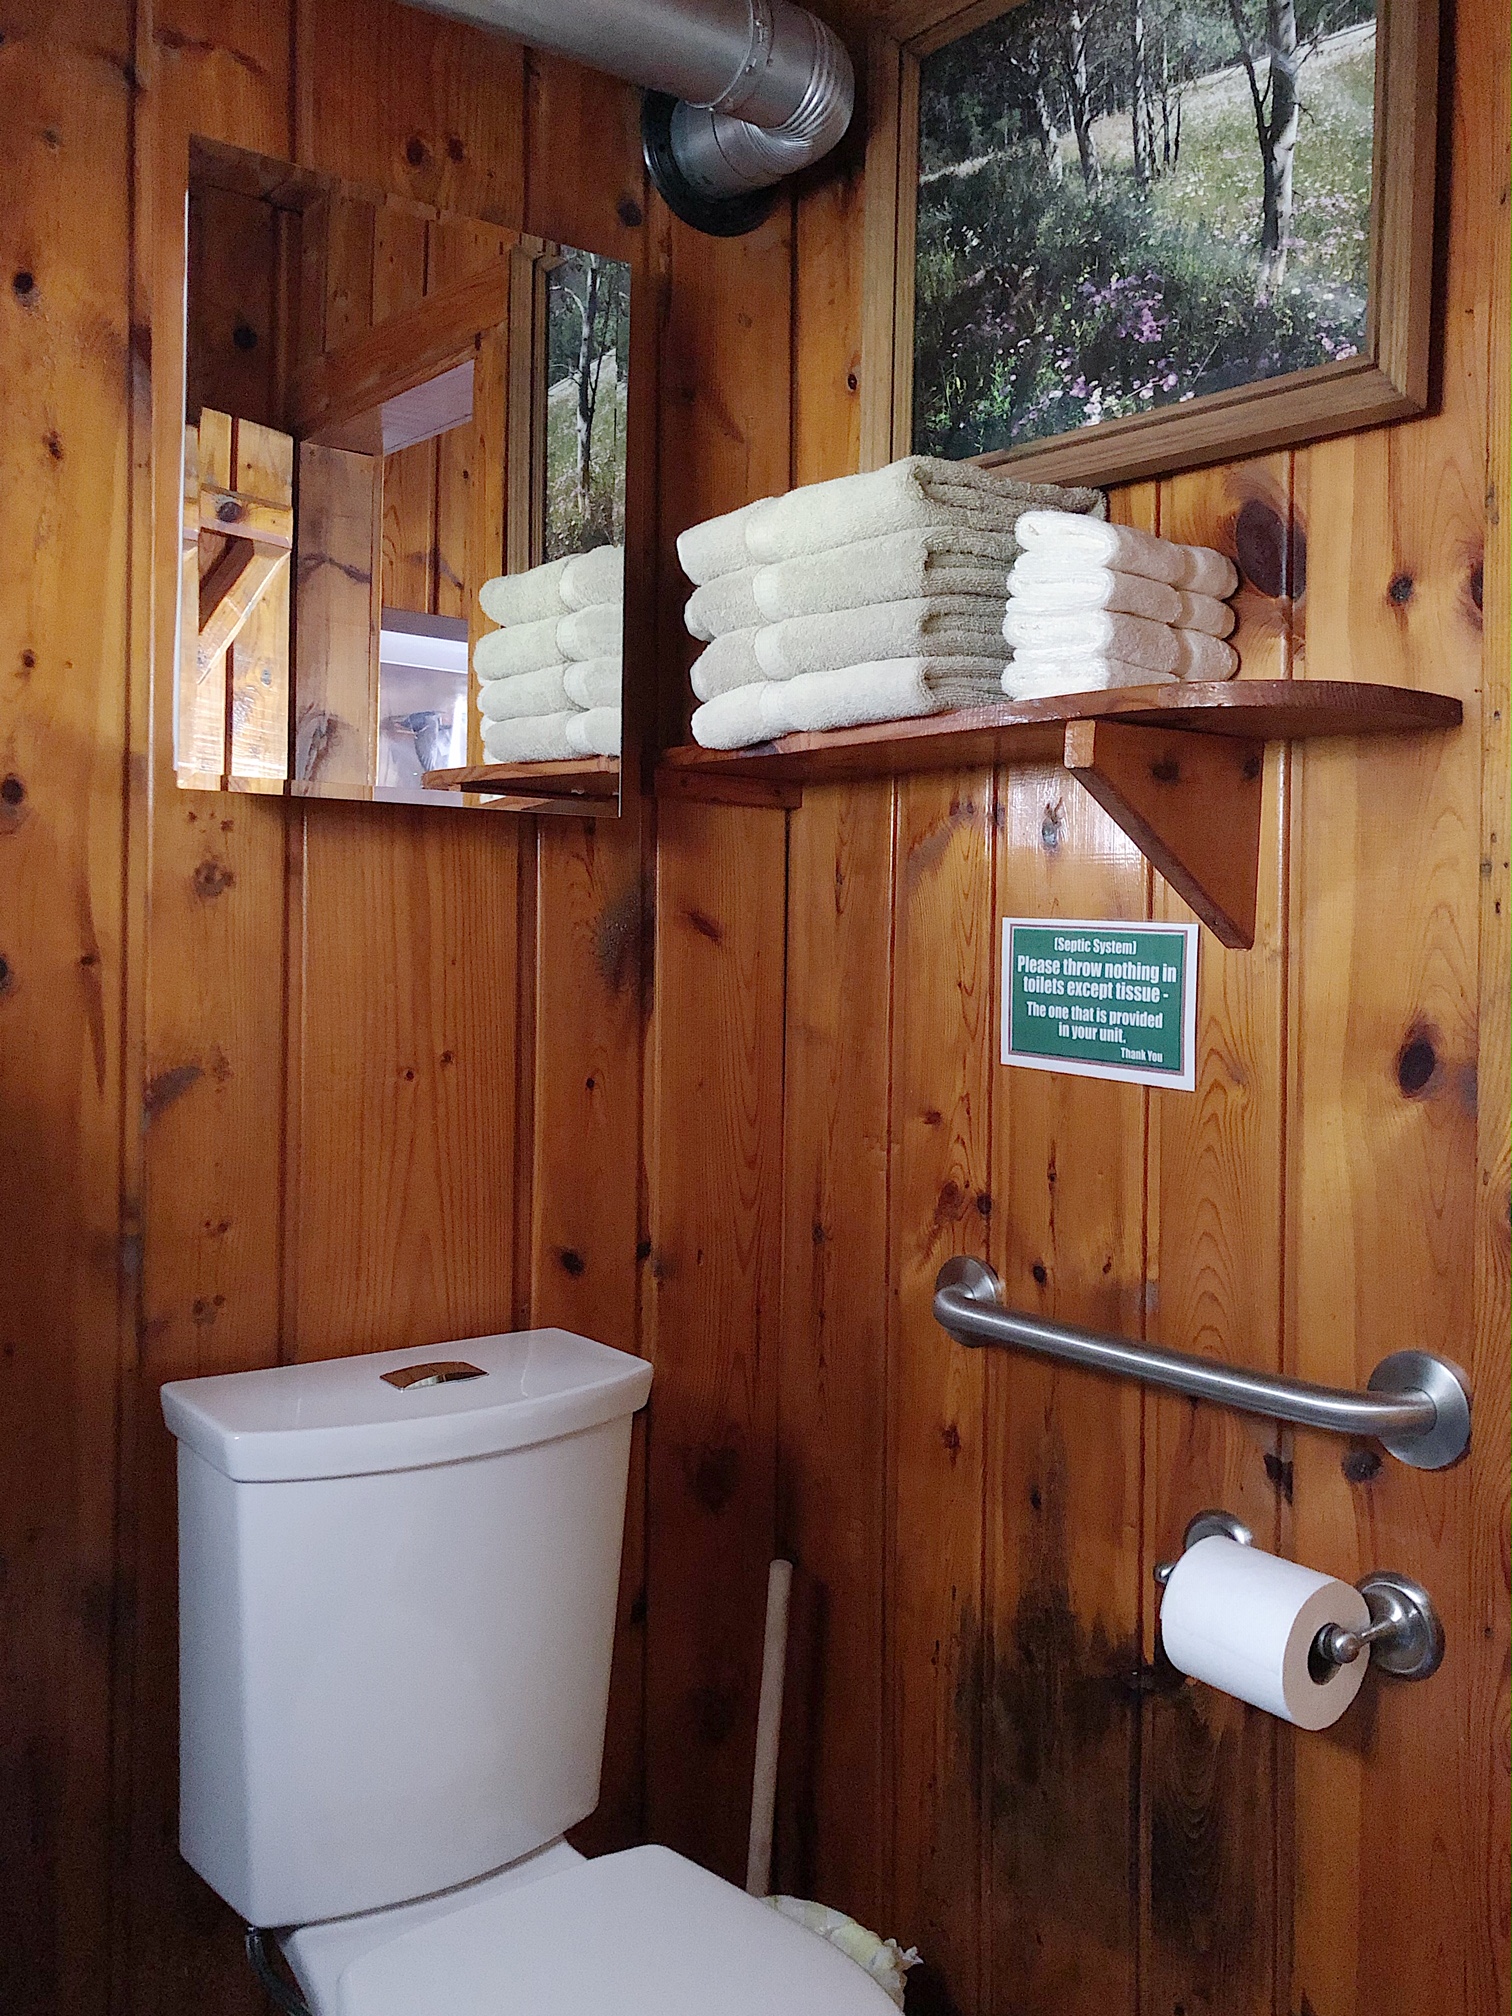 Twin Cedars Resort cabin 4 bathroom pics